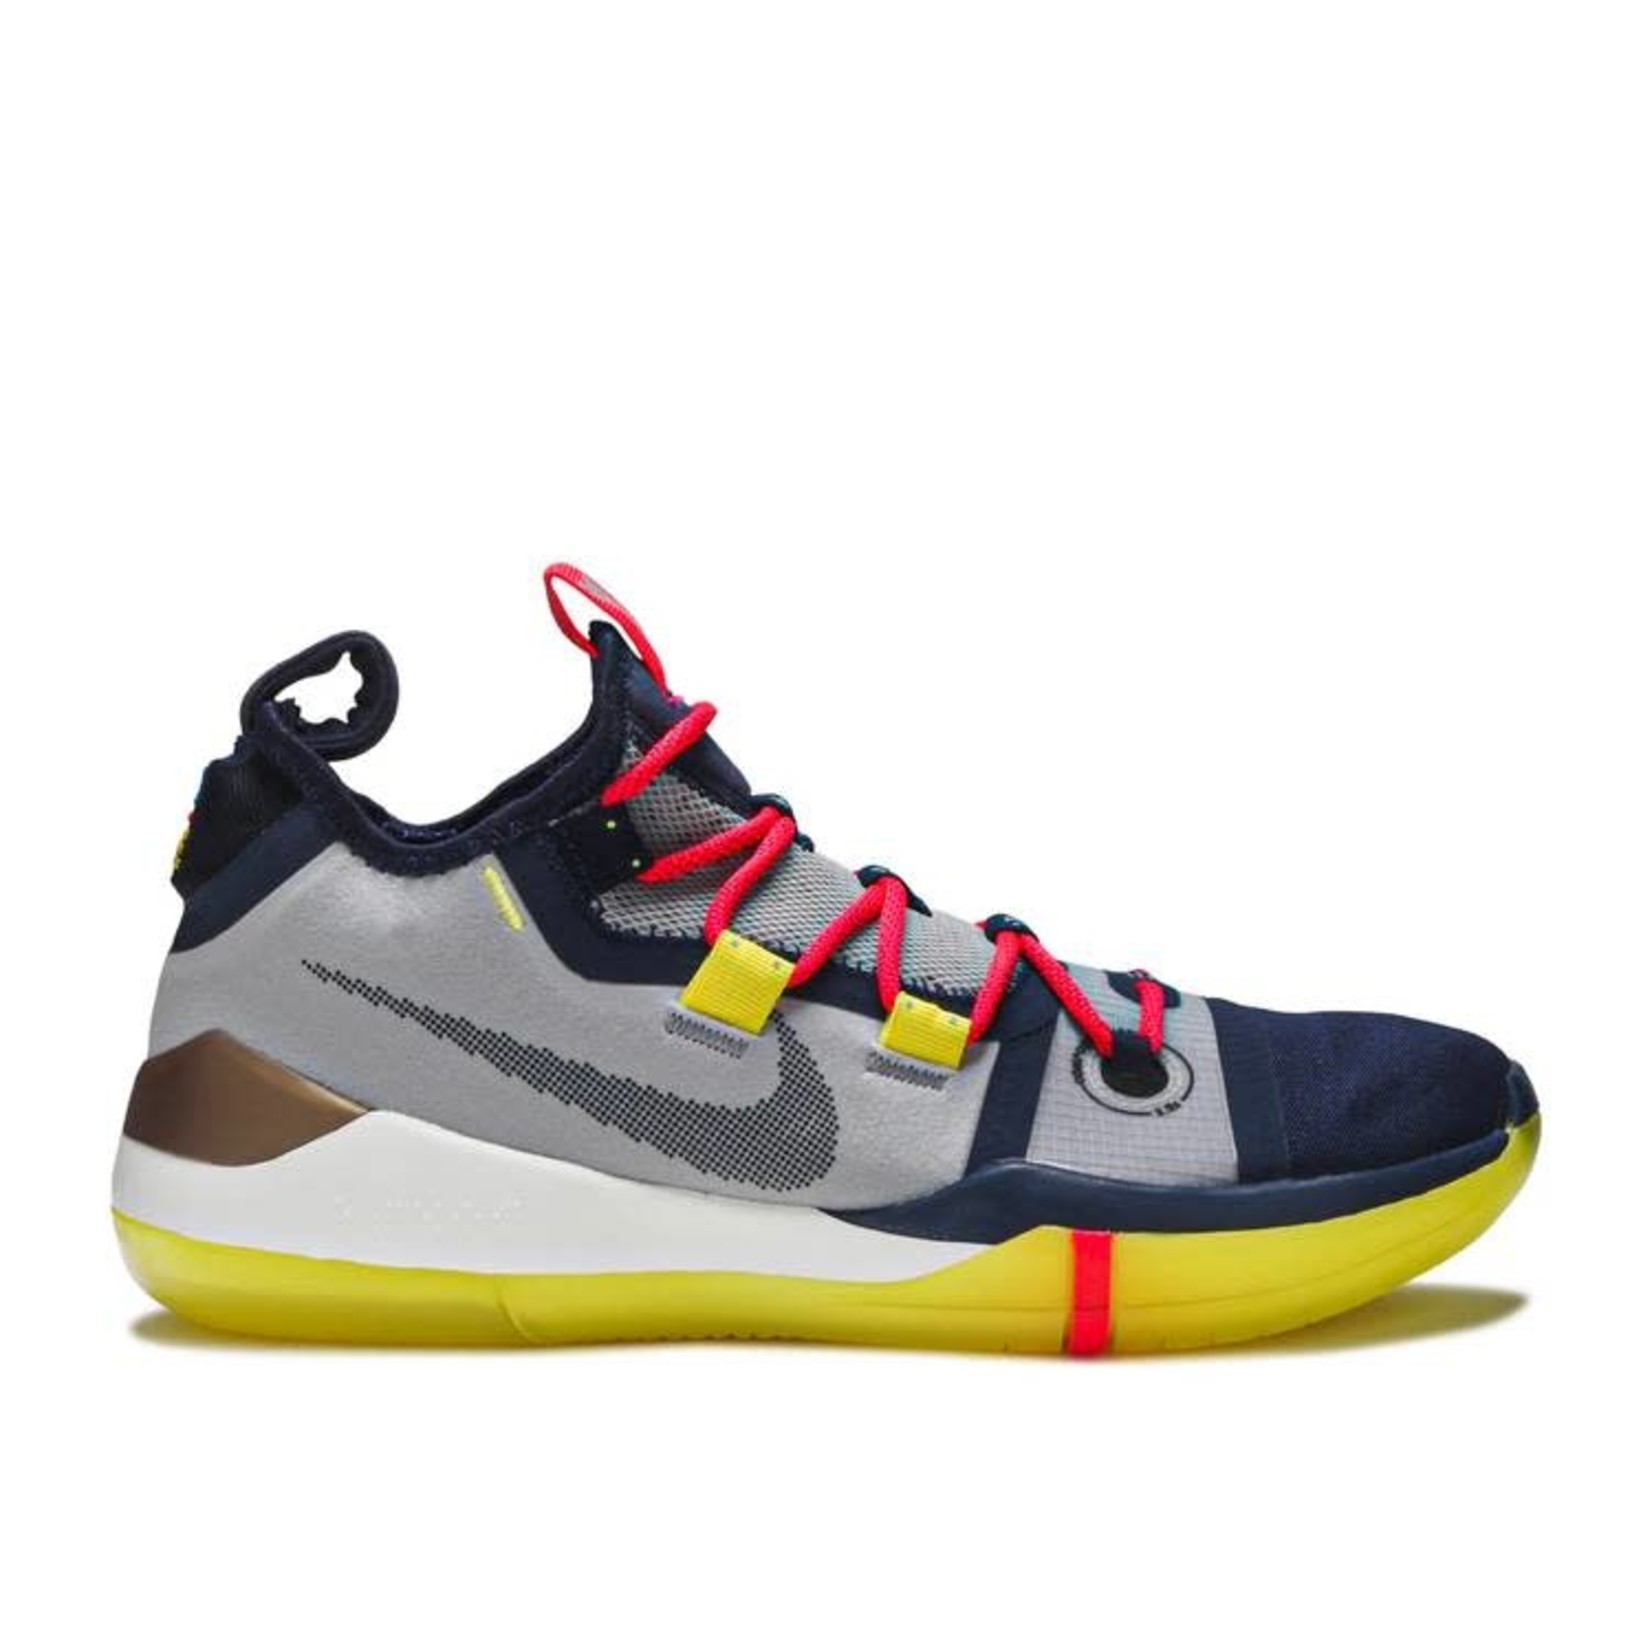 Nike Nike Kobe AD Sail Multi Color Size 9, DS BRAND NEW